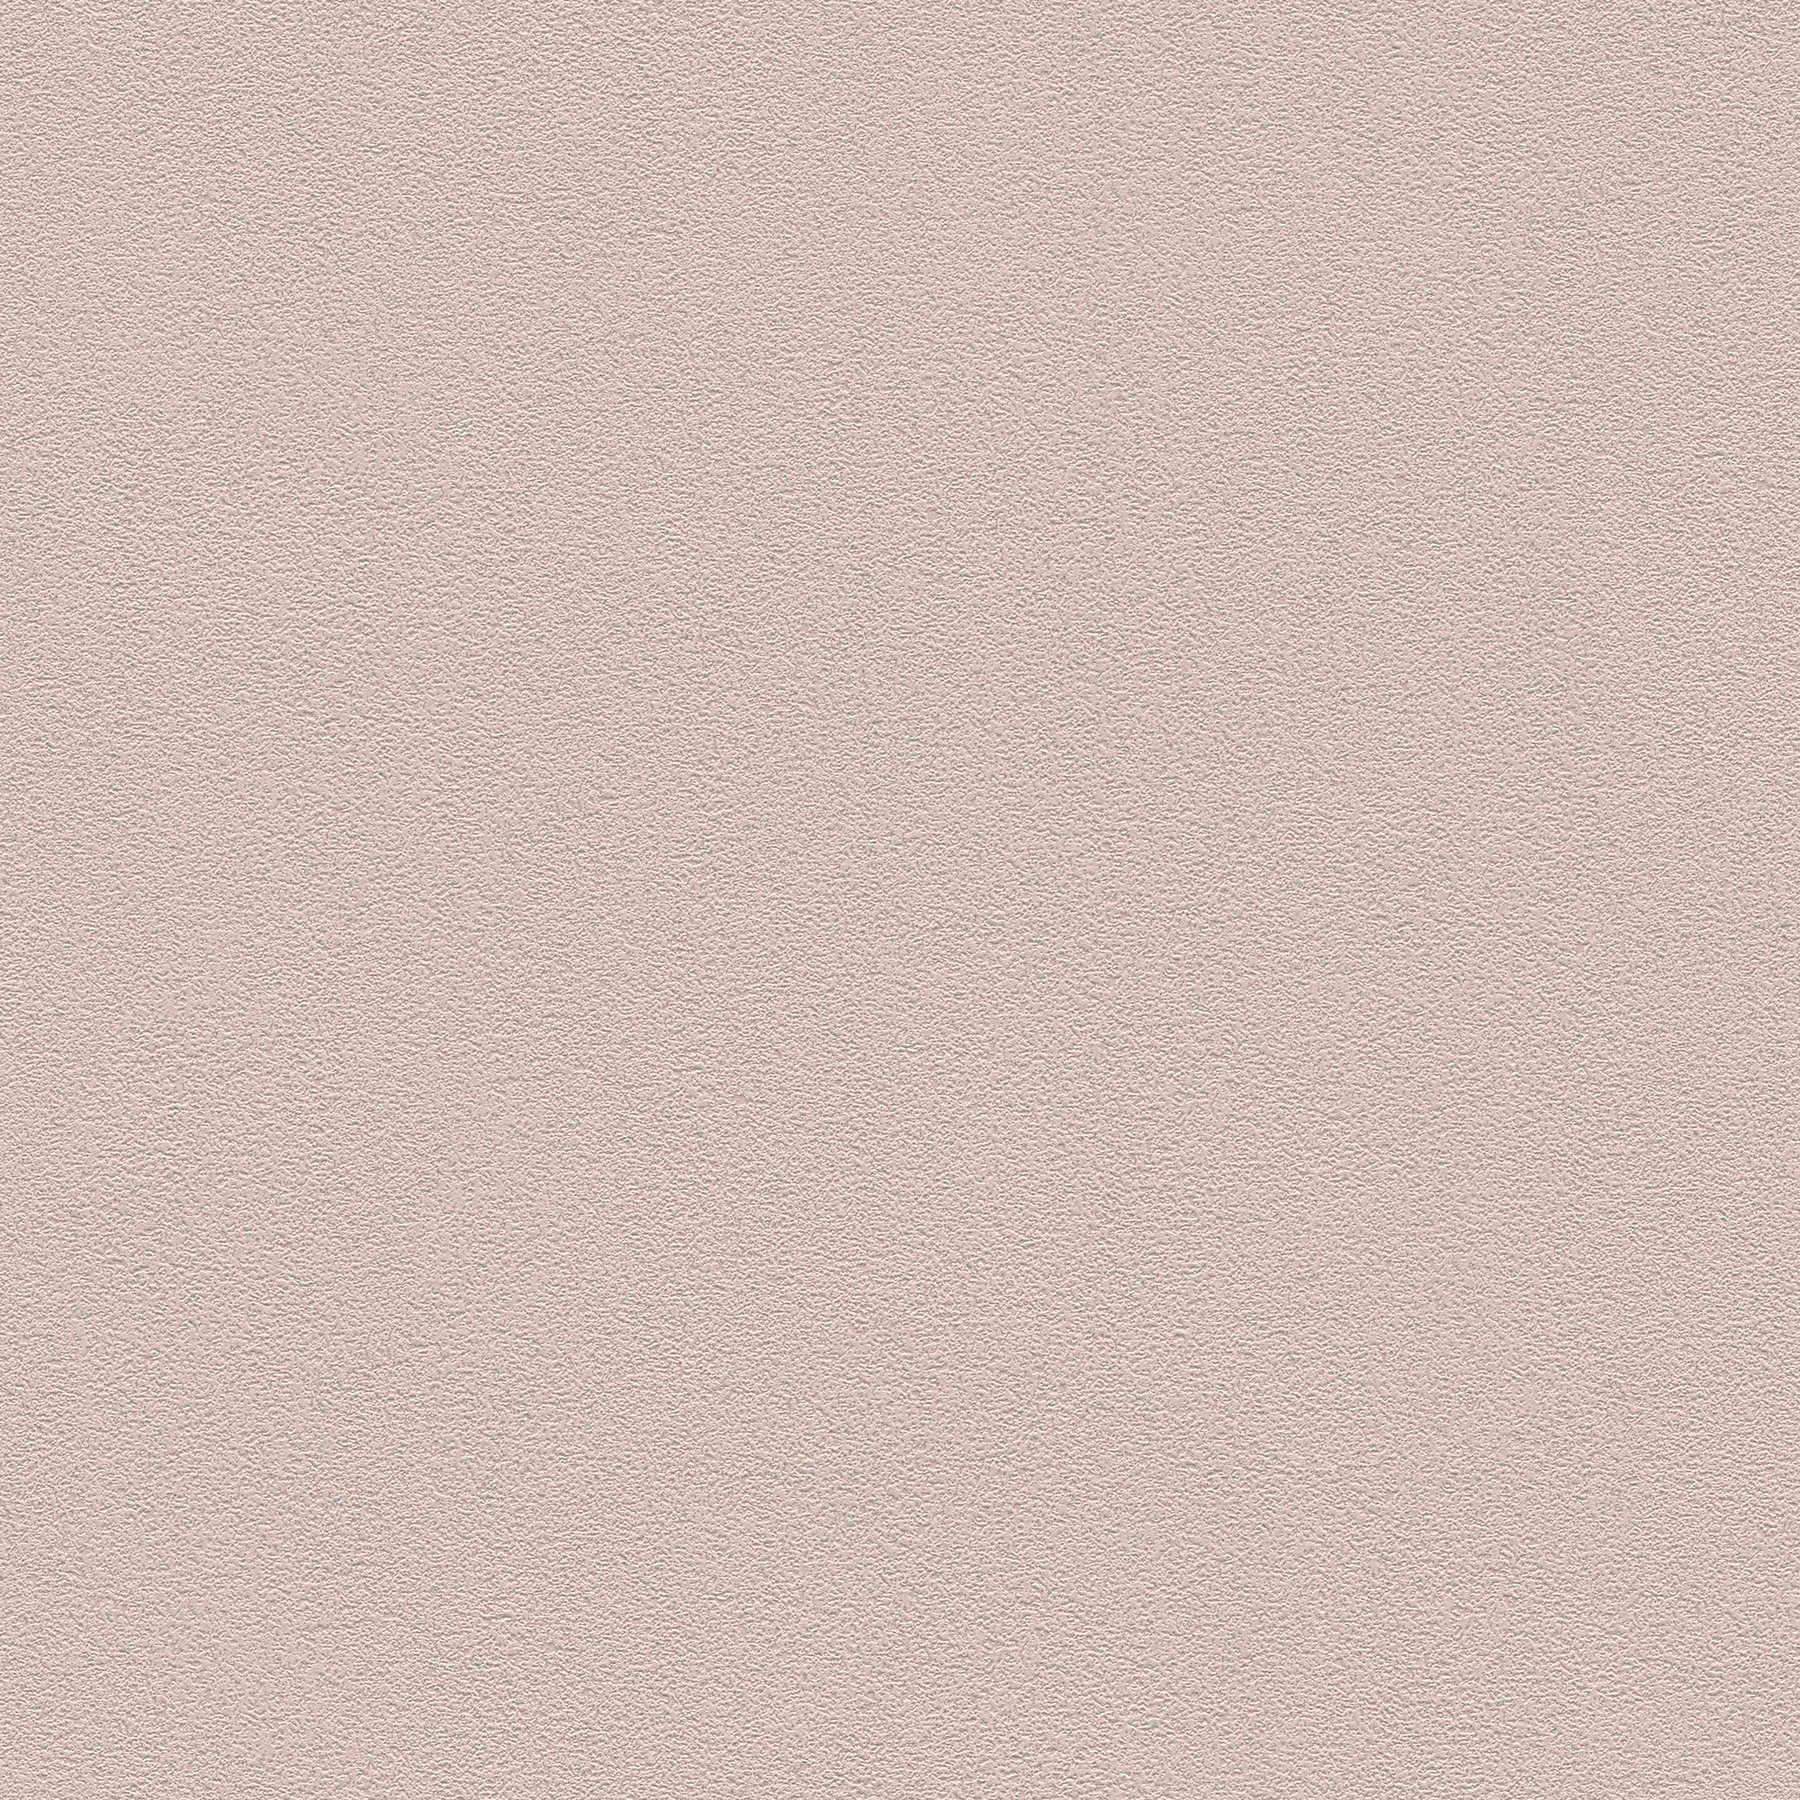 Plain wallpaper with surface texture & glitter effect - brown
